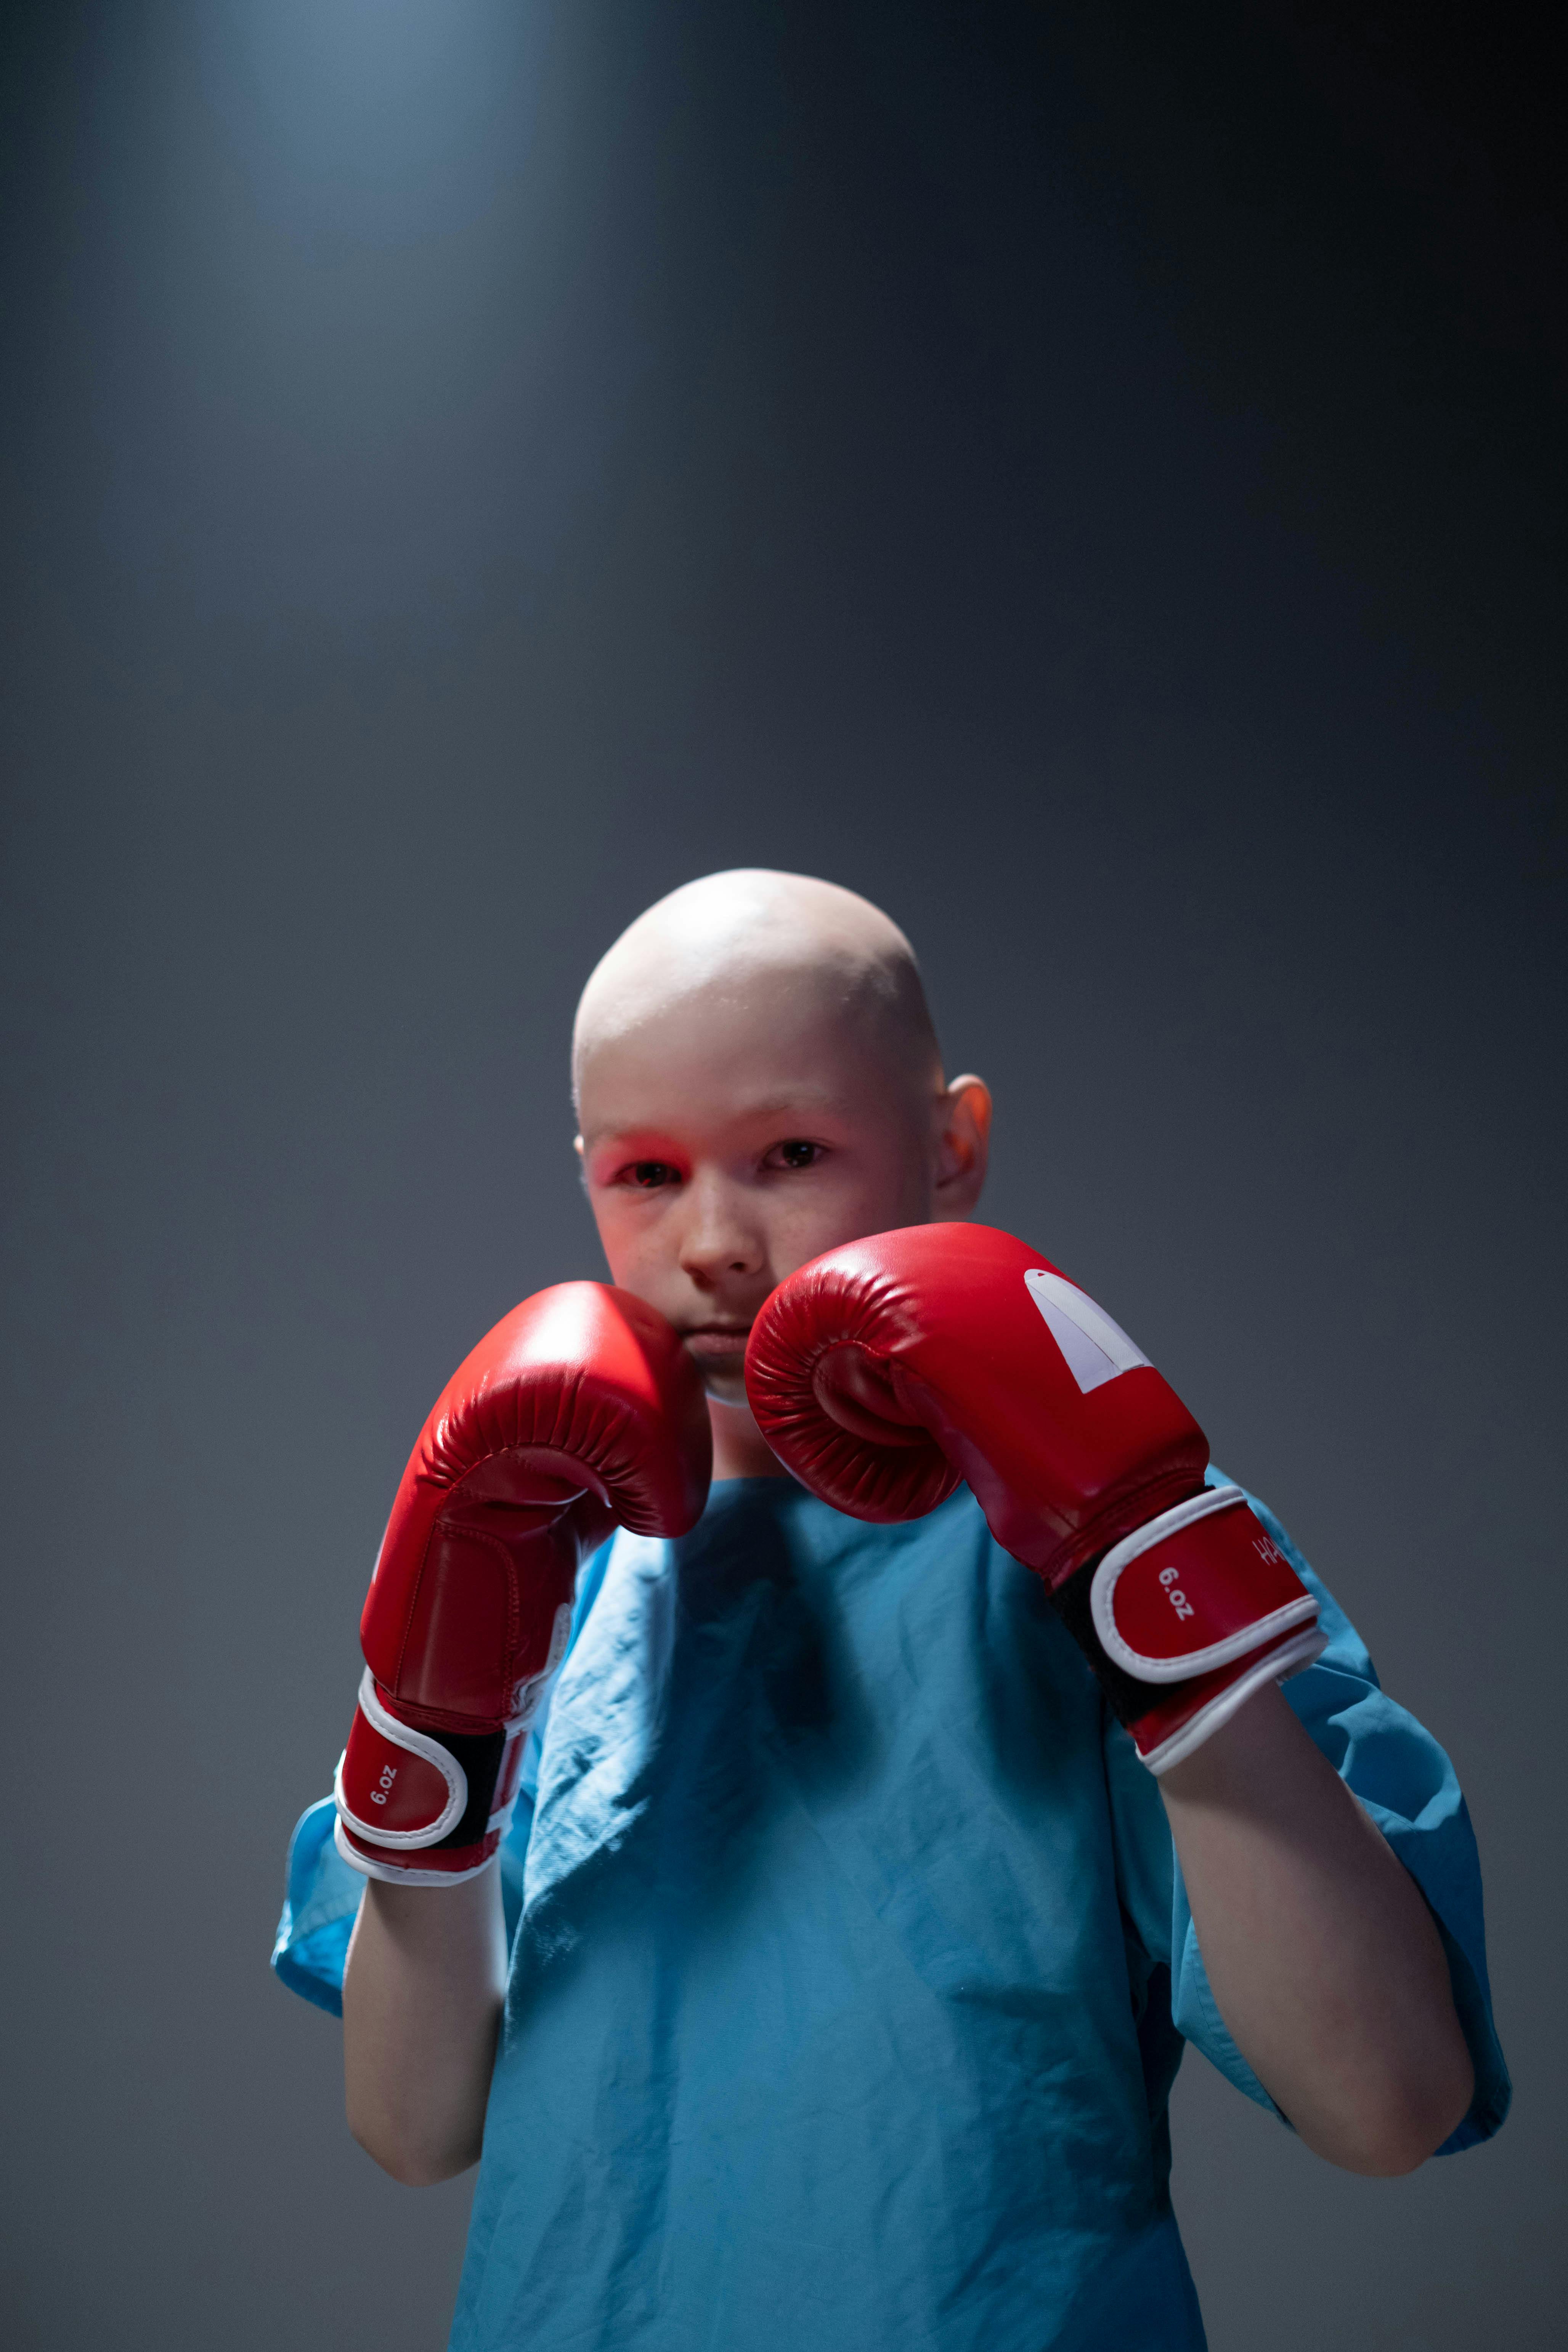 Kick-boxer in Fighting Stance Stock Image - Image of athlete, kick: 32572135